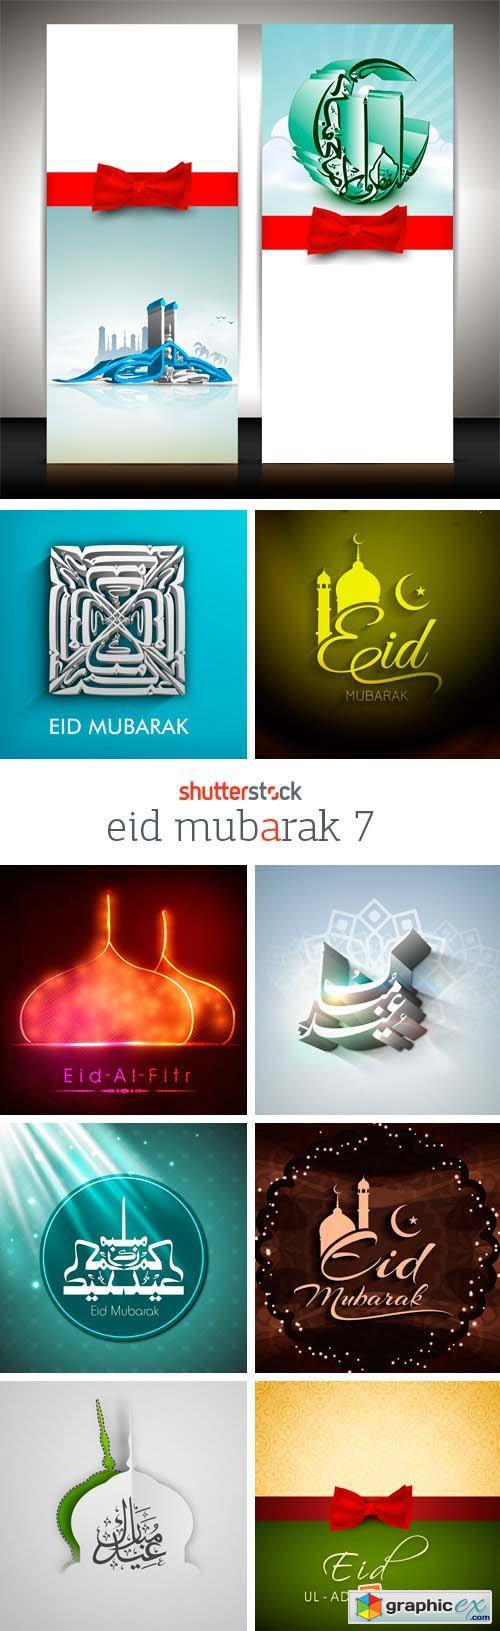 Eid Mubarak 7, 25xEPS